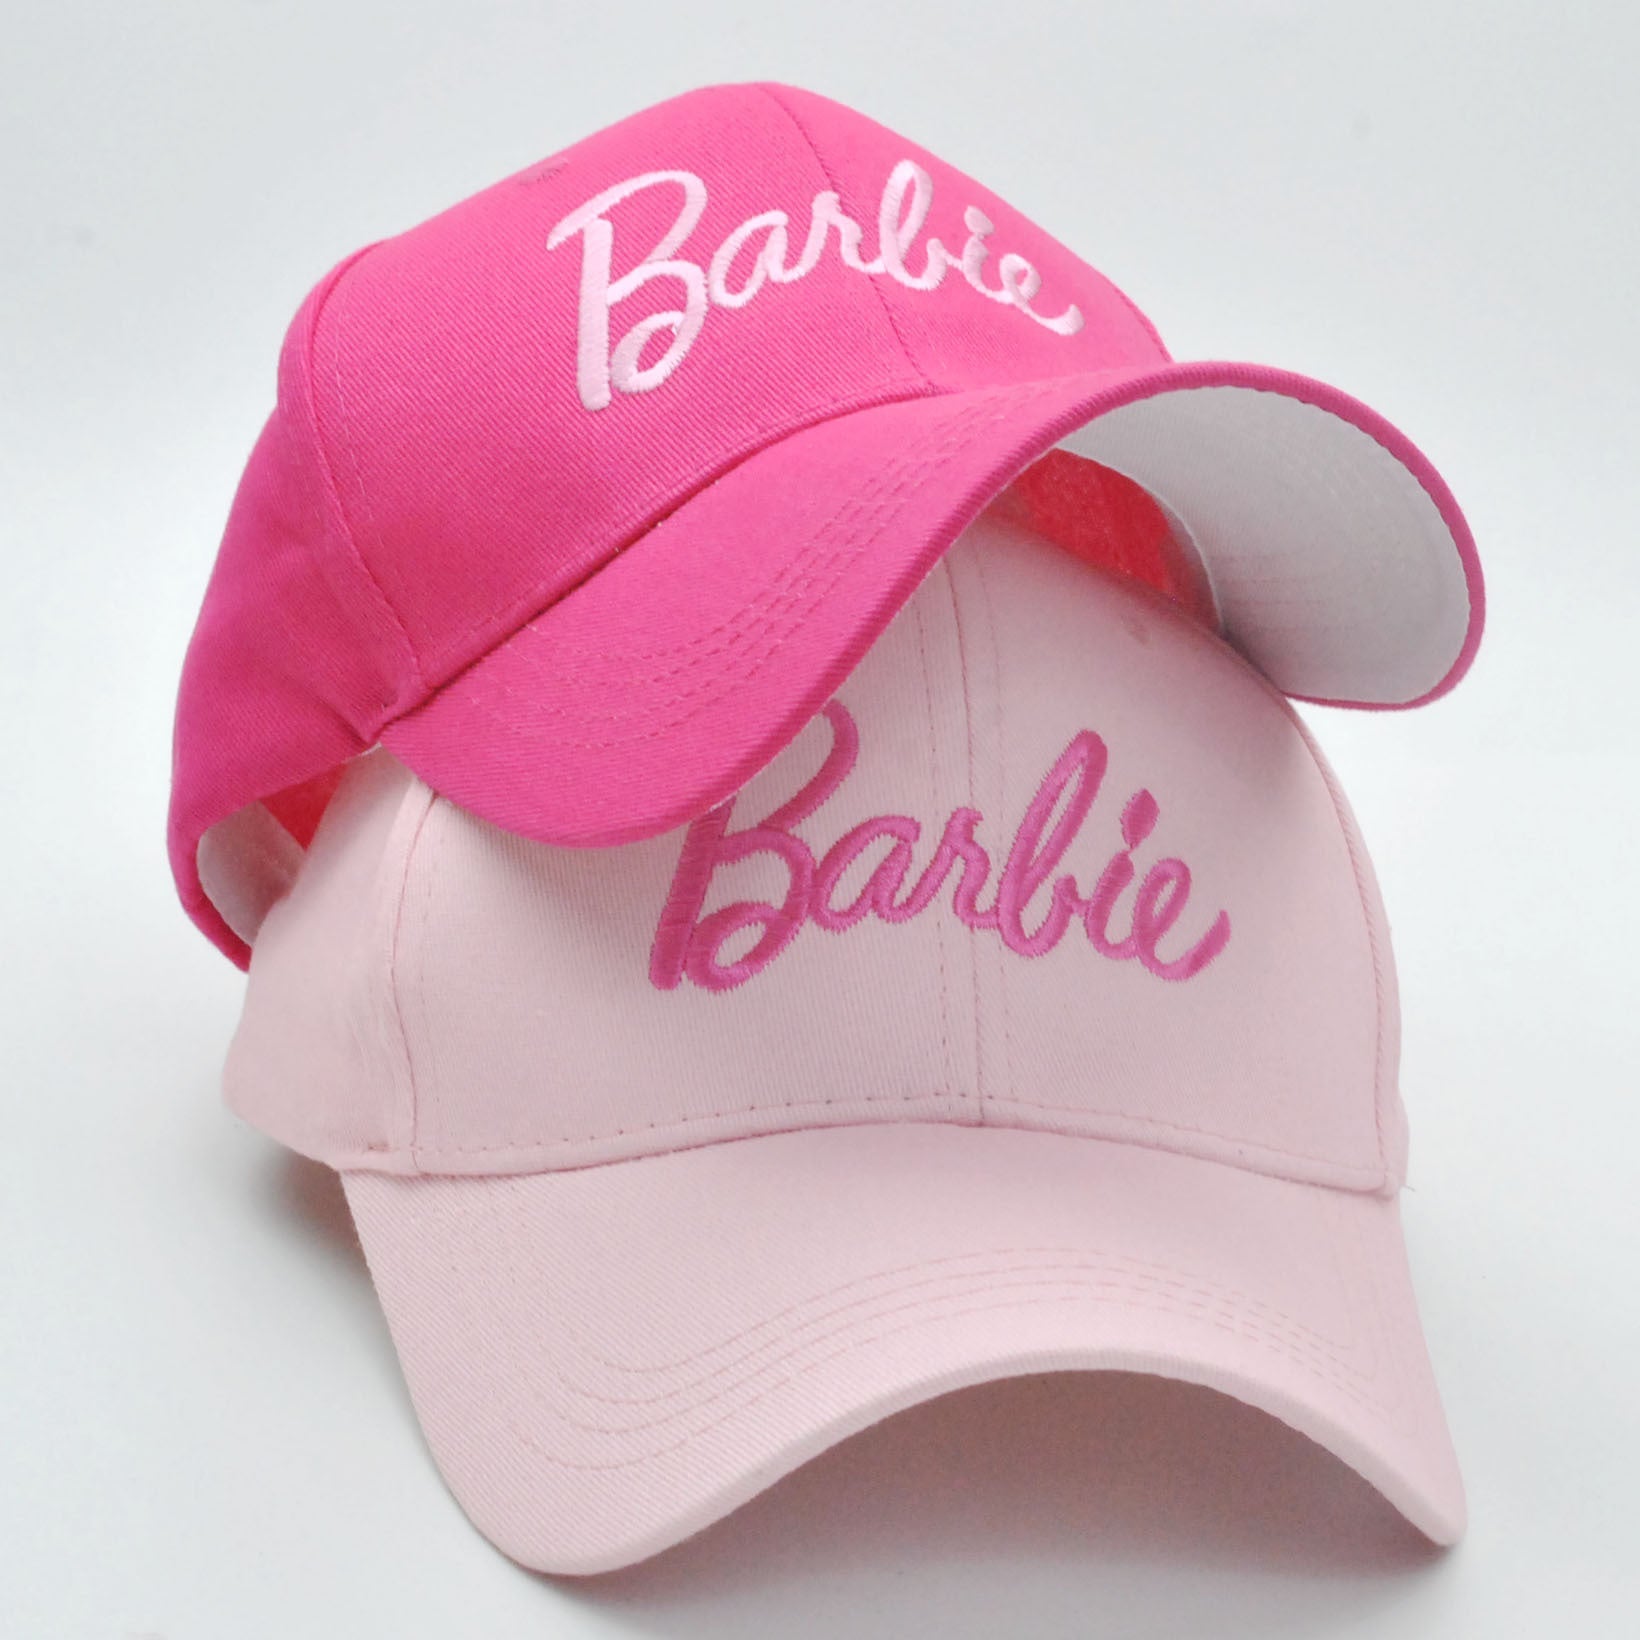 Barbie Hard Crown Baseball Cap